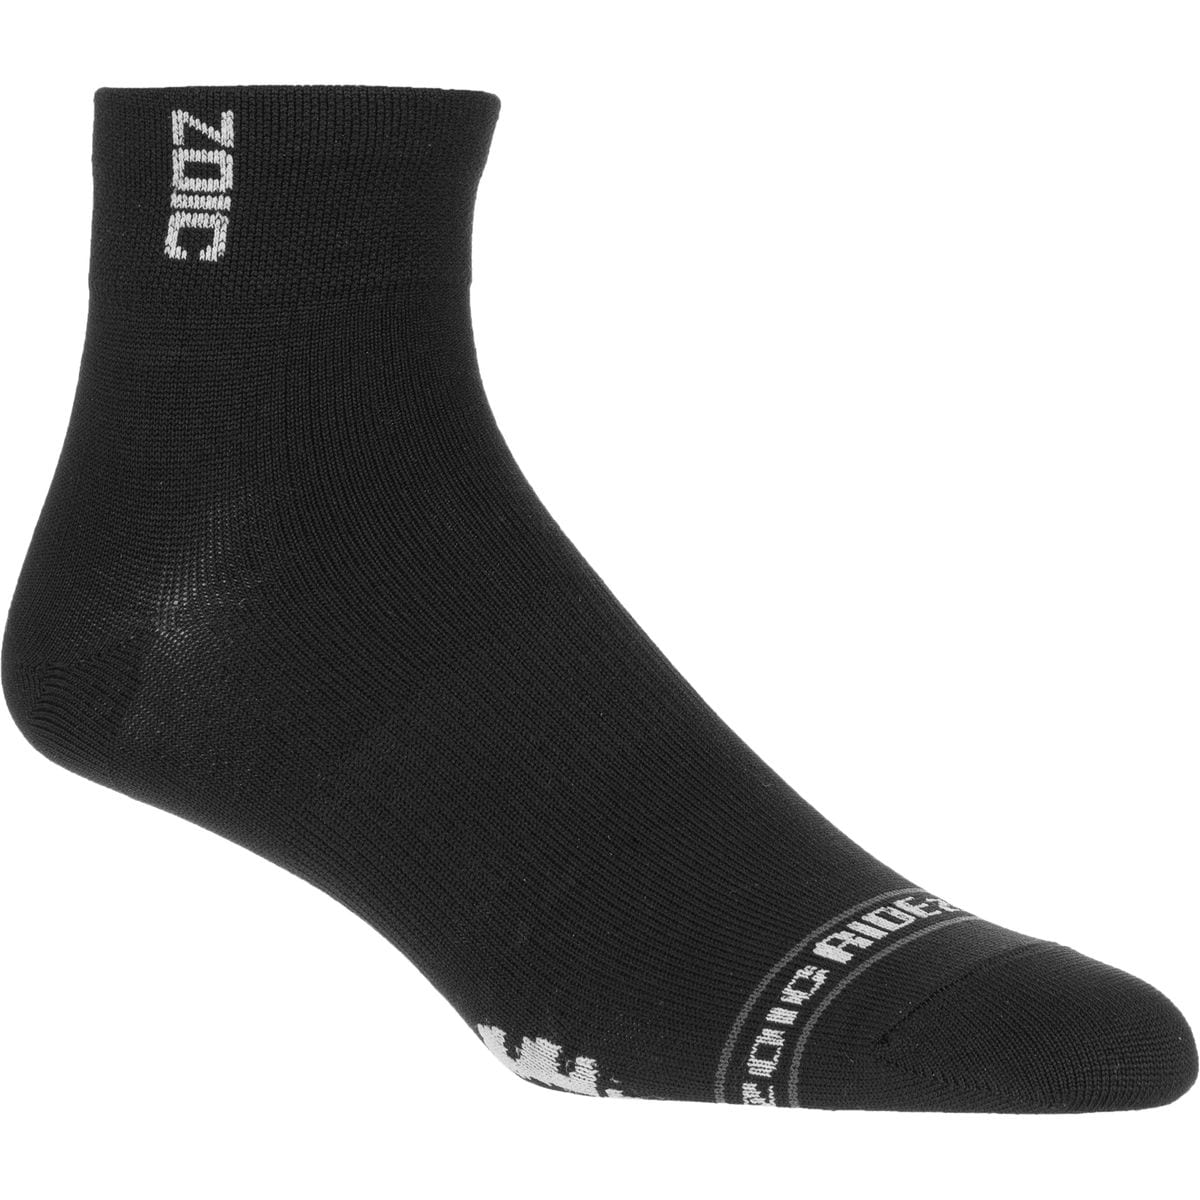 ZOIC Short Sock Men's